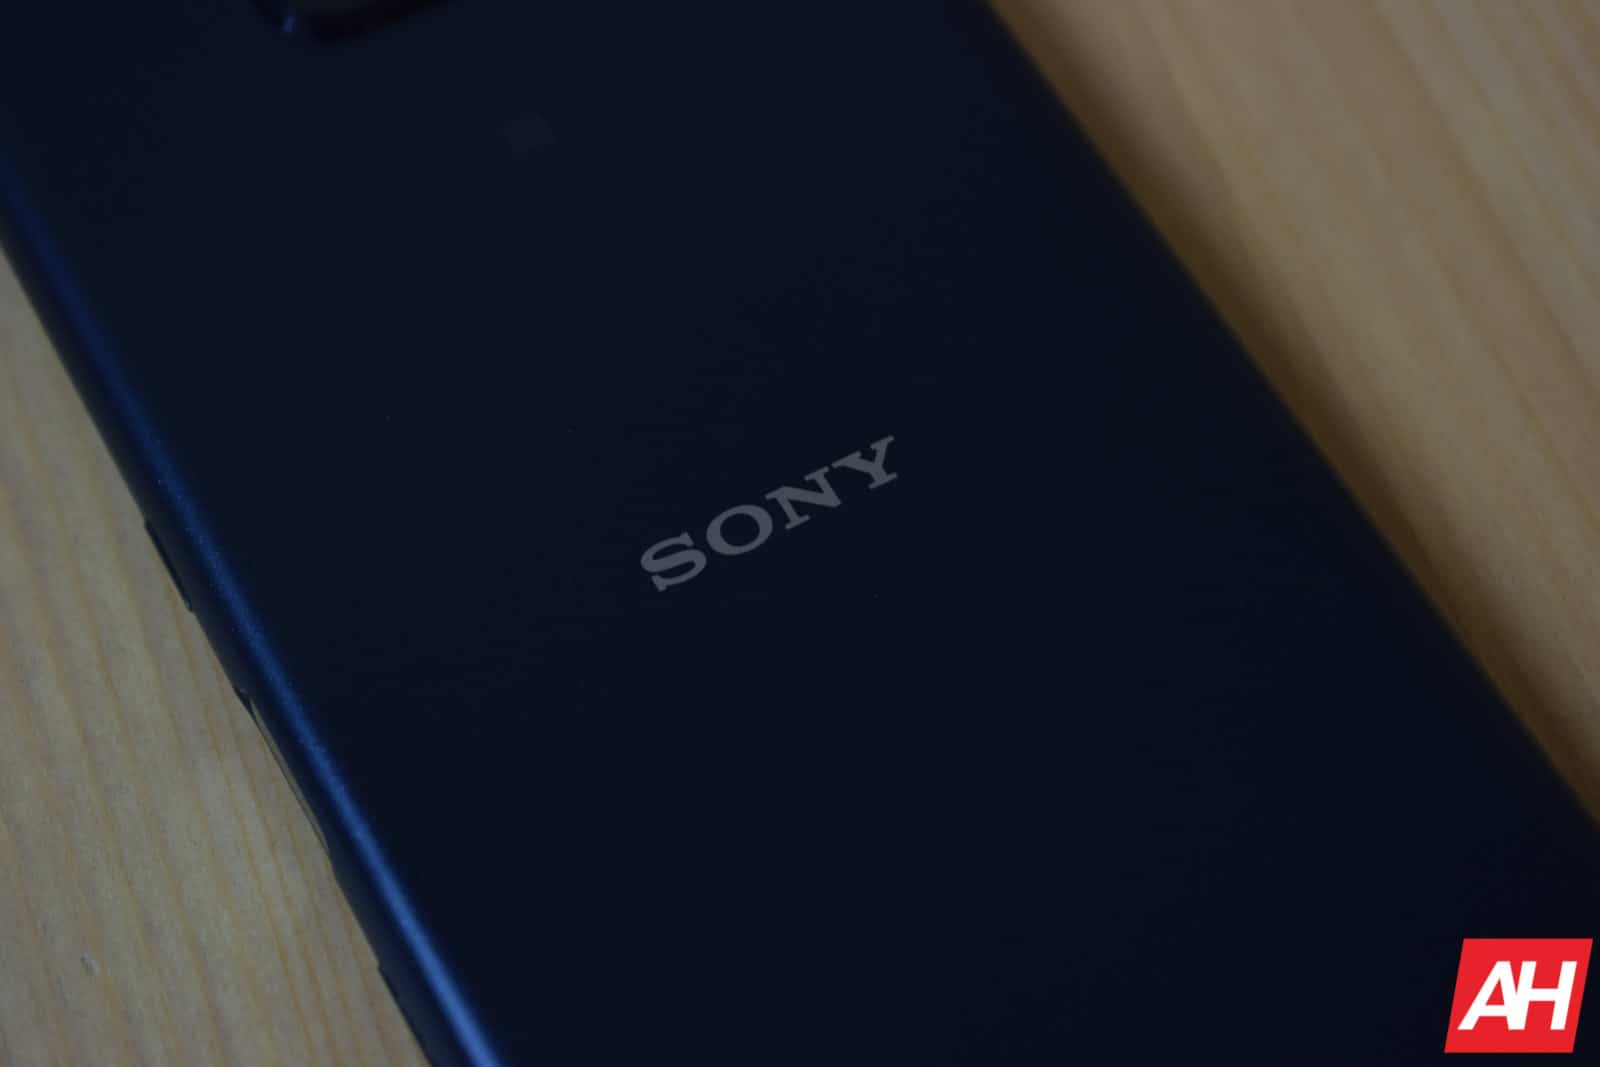 Sony патентует дизайн телефона с двойным раскрывающимся и раскрывающимся механизмом